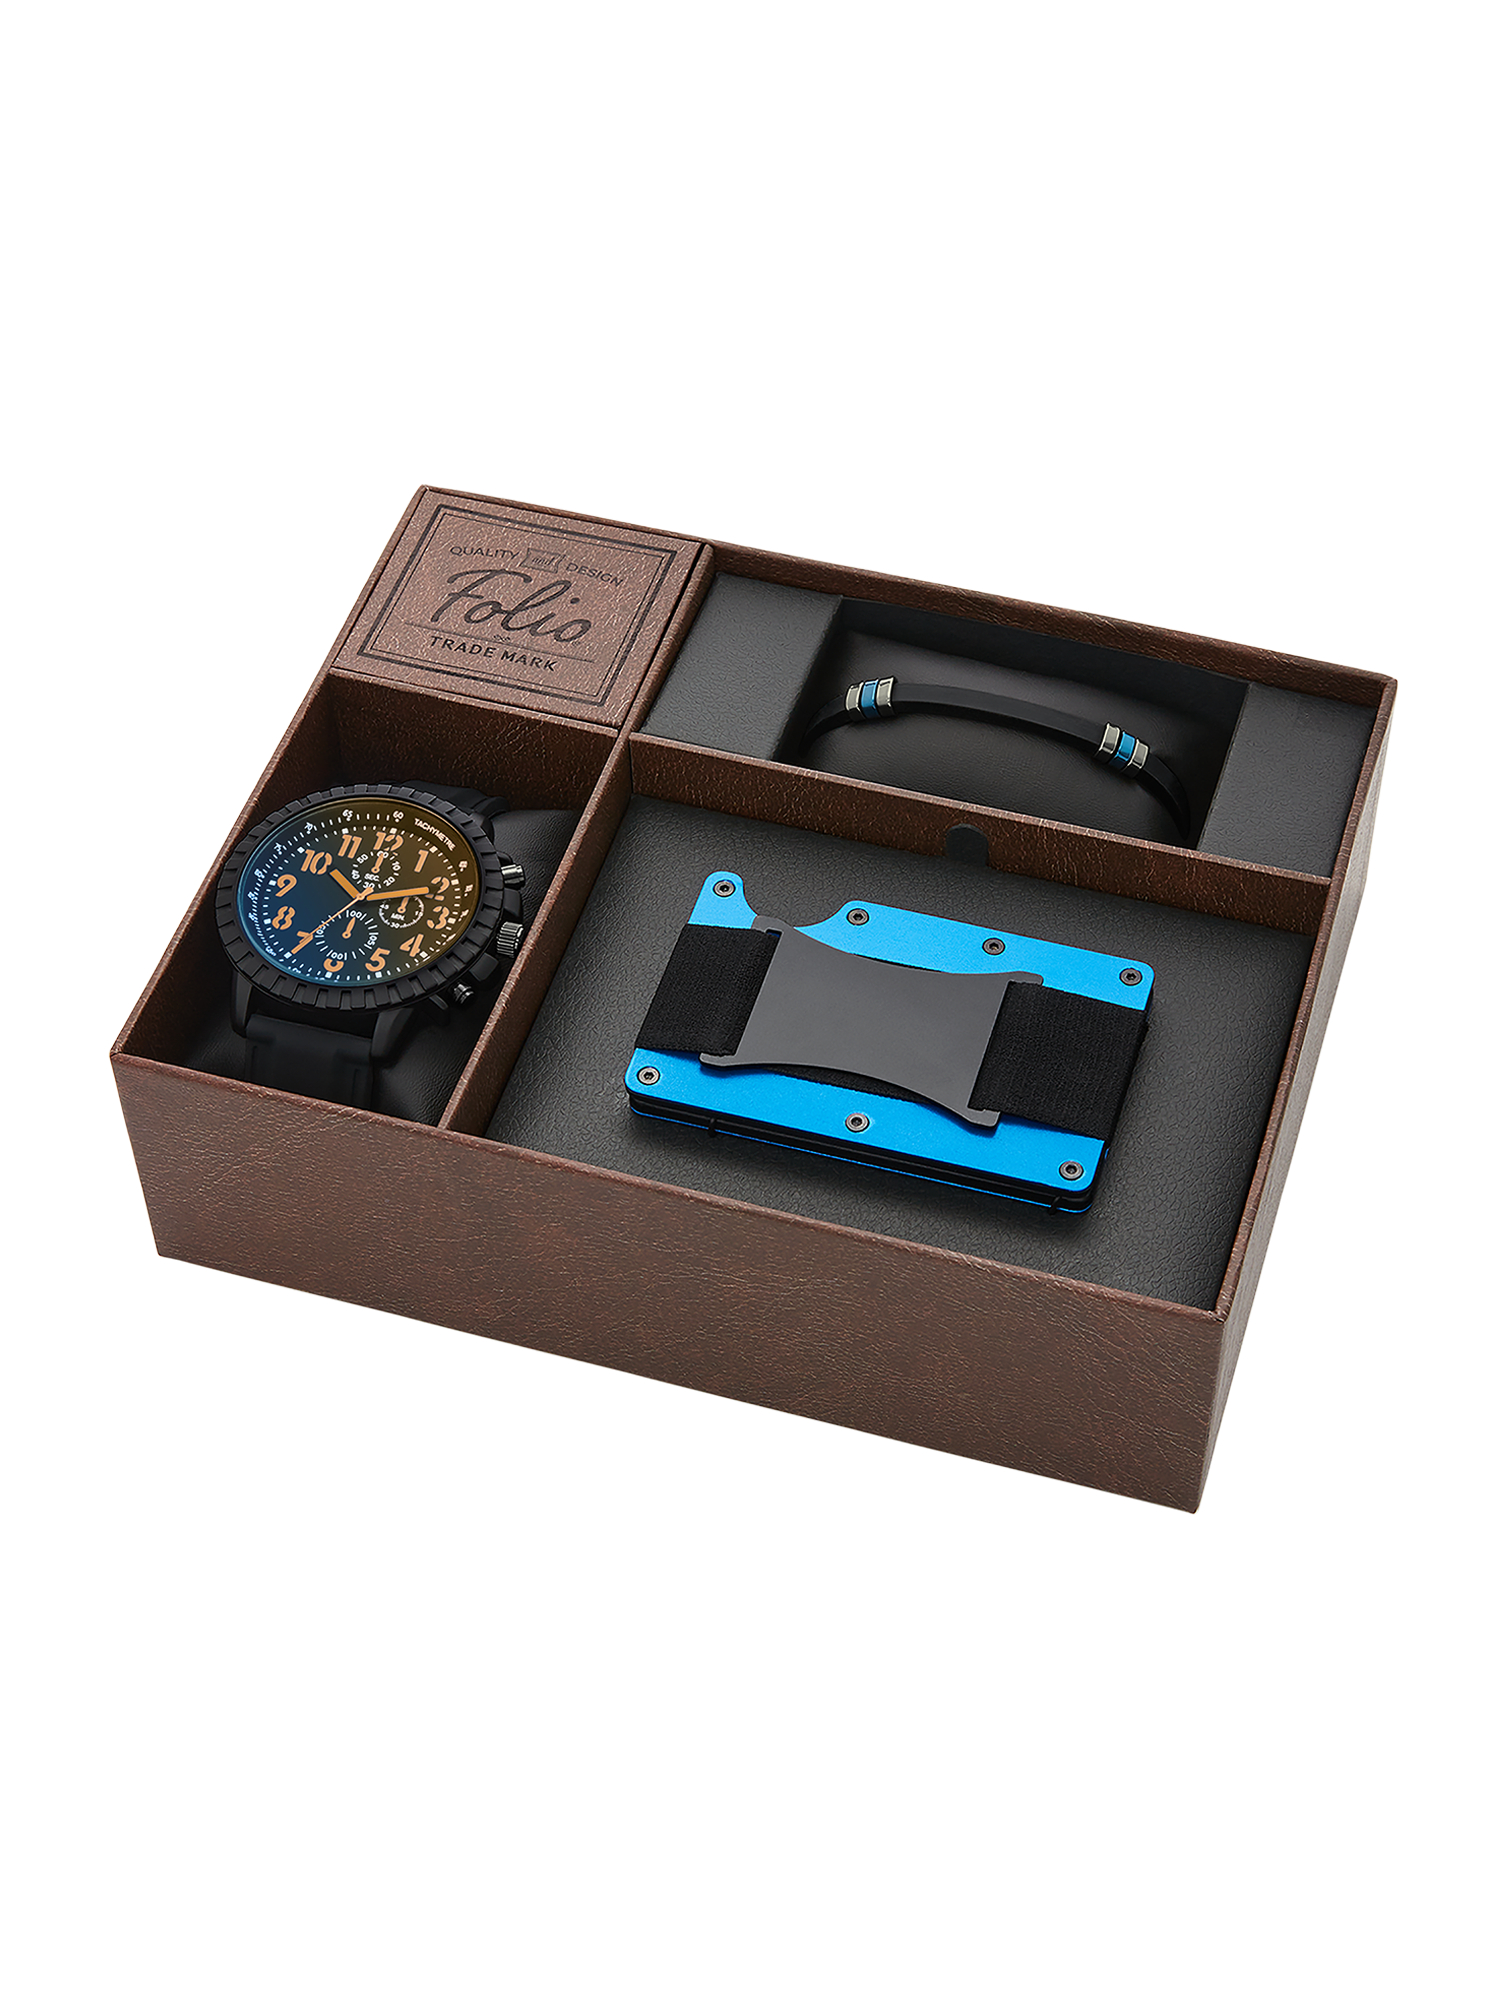 Folio Men's Black Round Analog Watch with Black Silicone Strap, Fashion Bracelet and Blue Metal Card Case Gift Set (FMDAL1141) - image 3 of 3